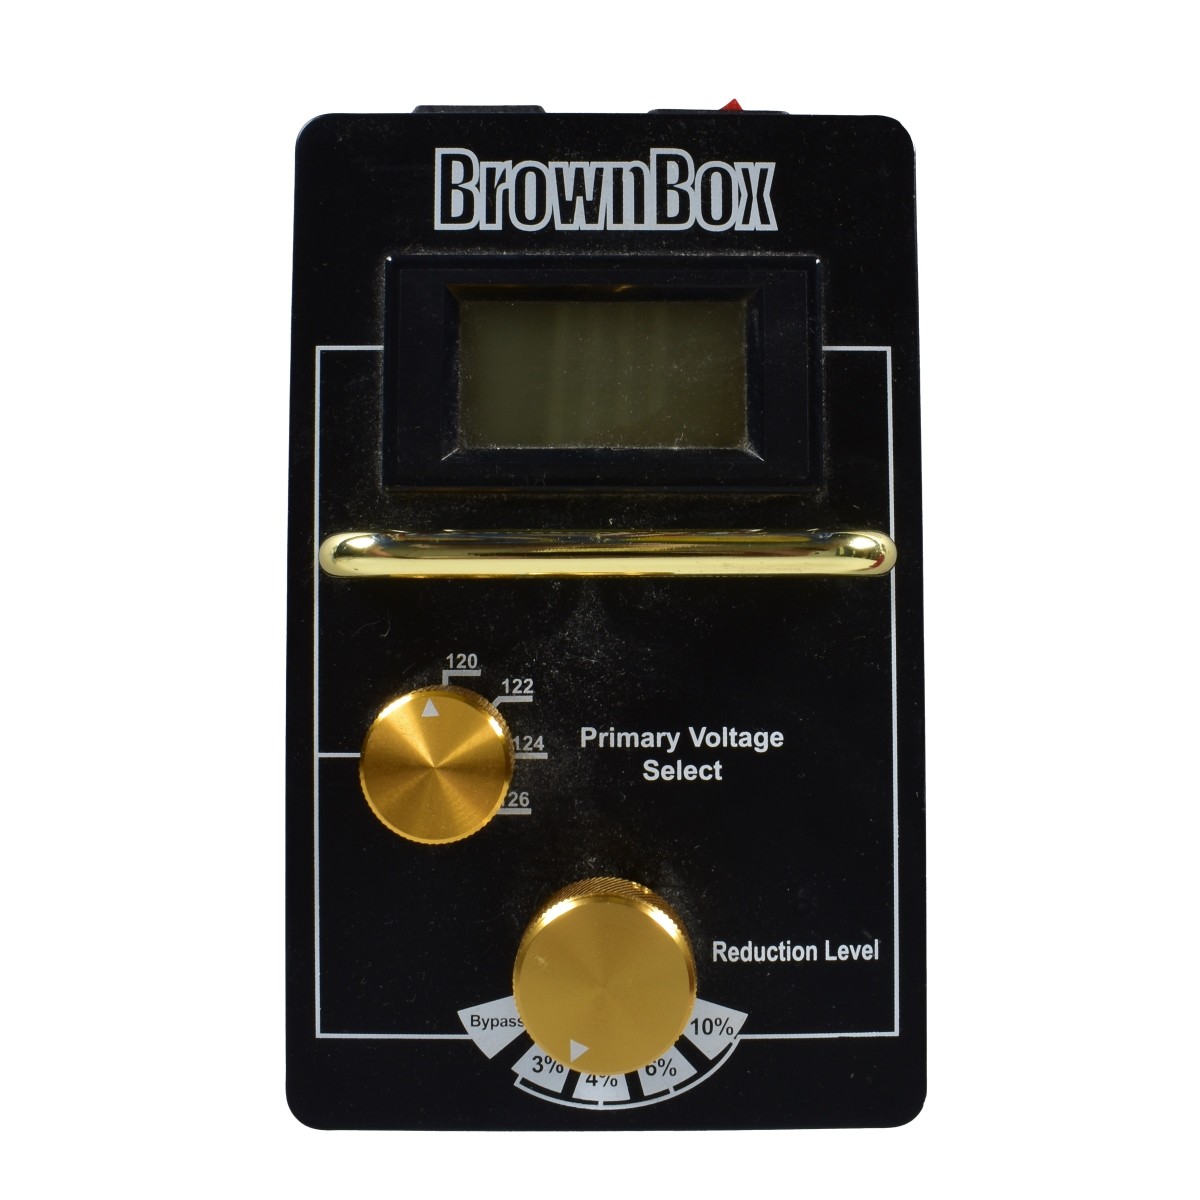 Brownbox Amp and a Vox Original Pedal